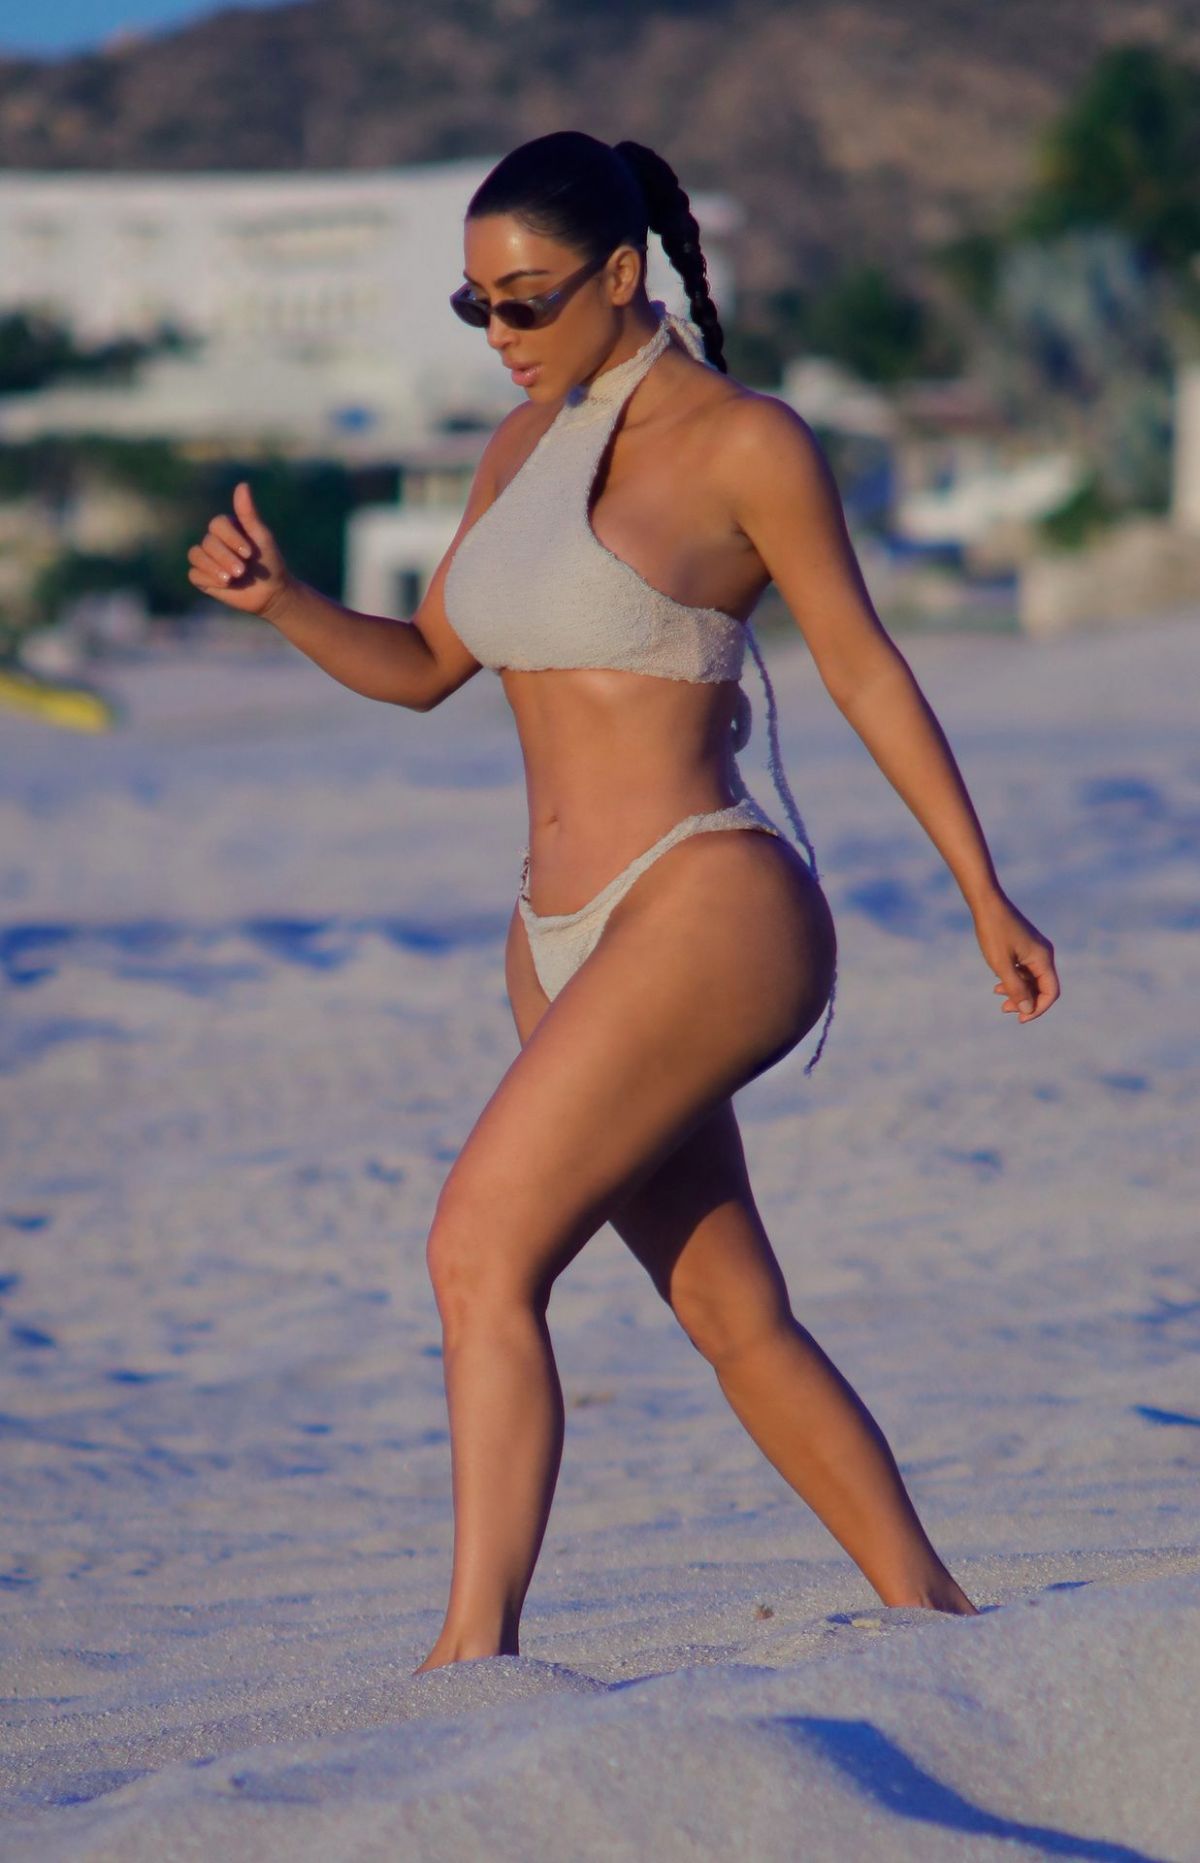 kim-kardashian-wearing-a-bikini-out-in-mexico-13.jpg